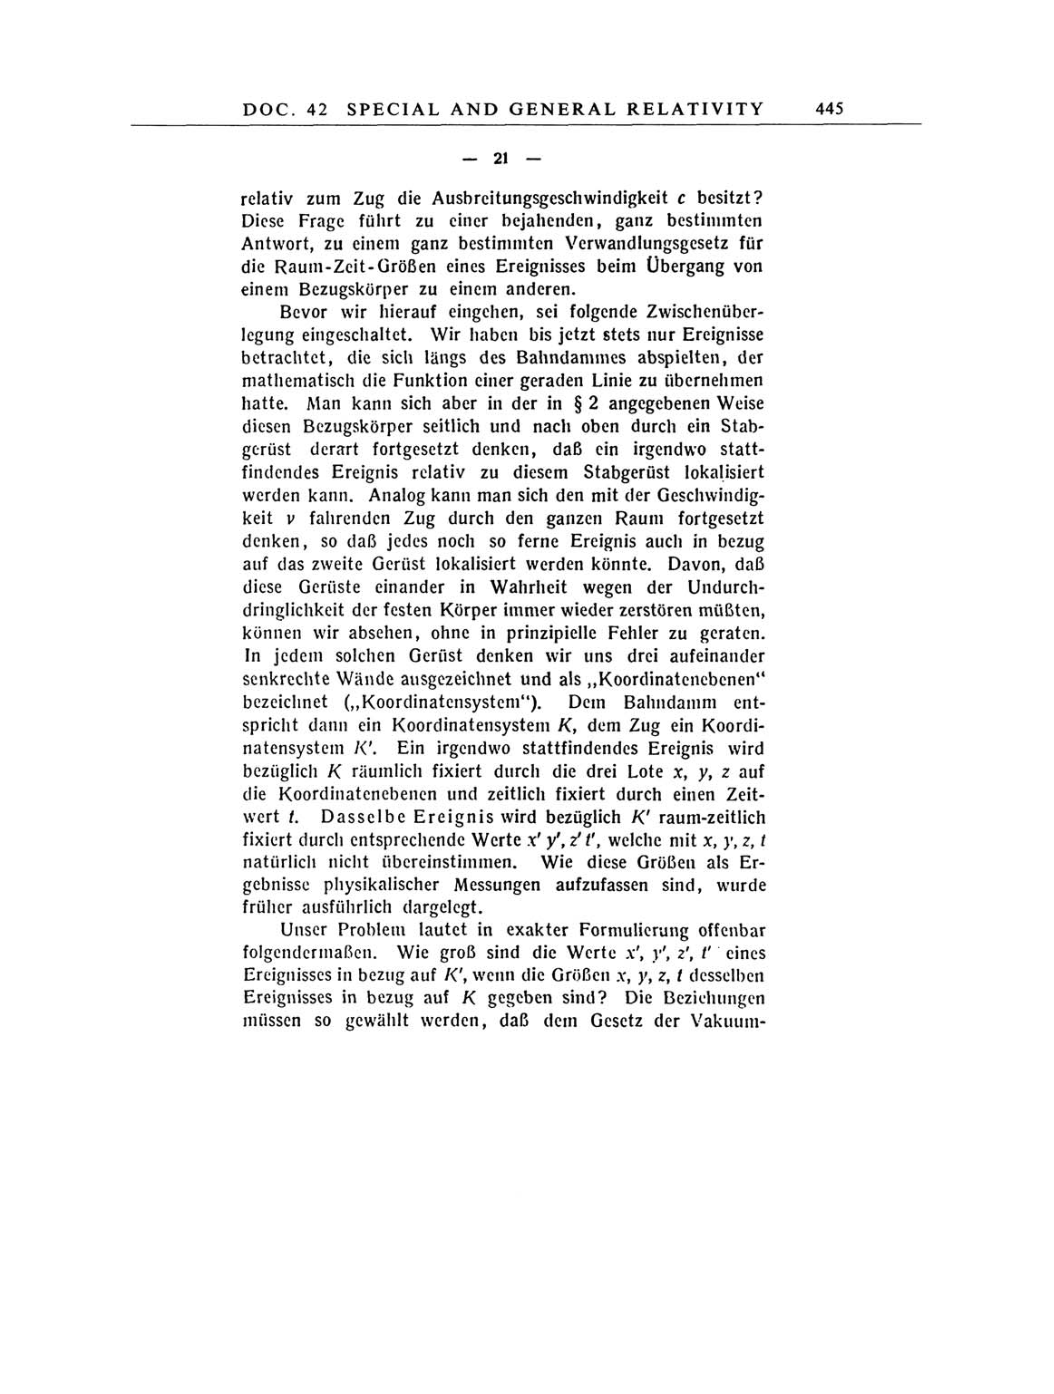 Volume 6: The Berlin Years: Writings, 1914-1917 page 445